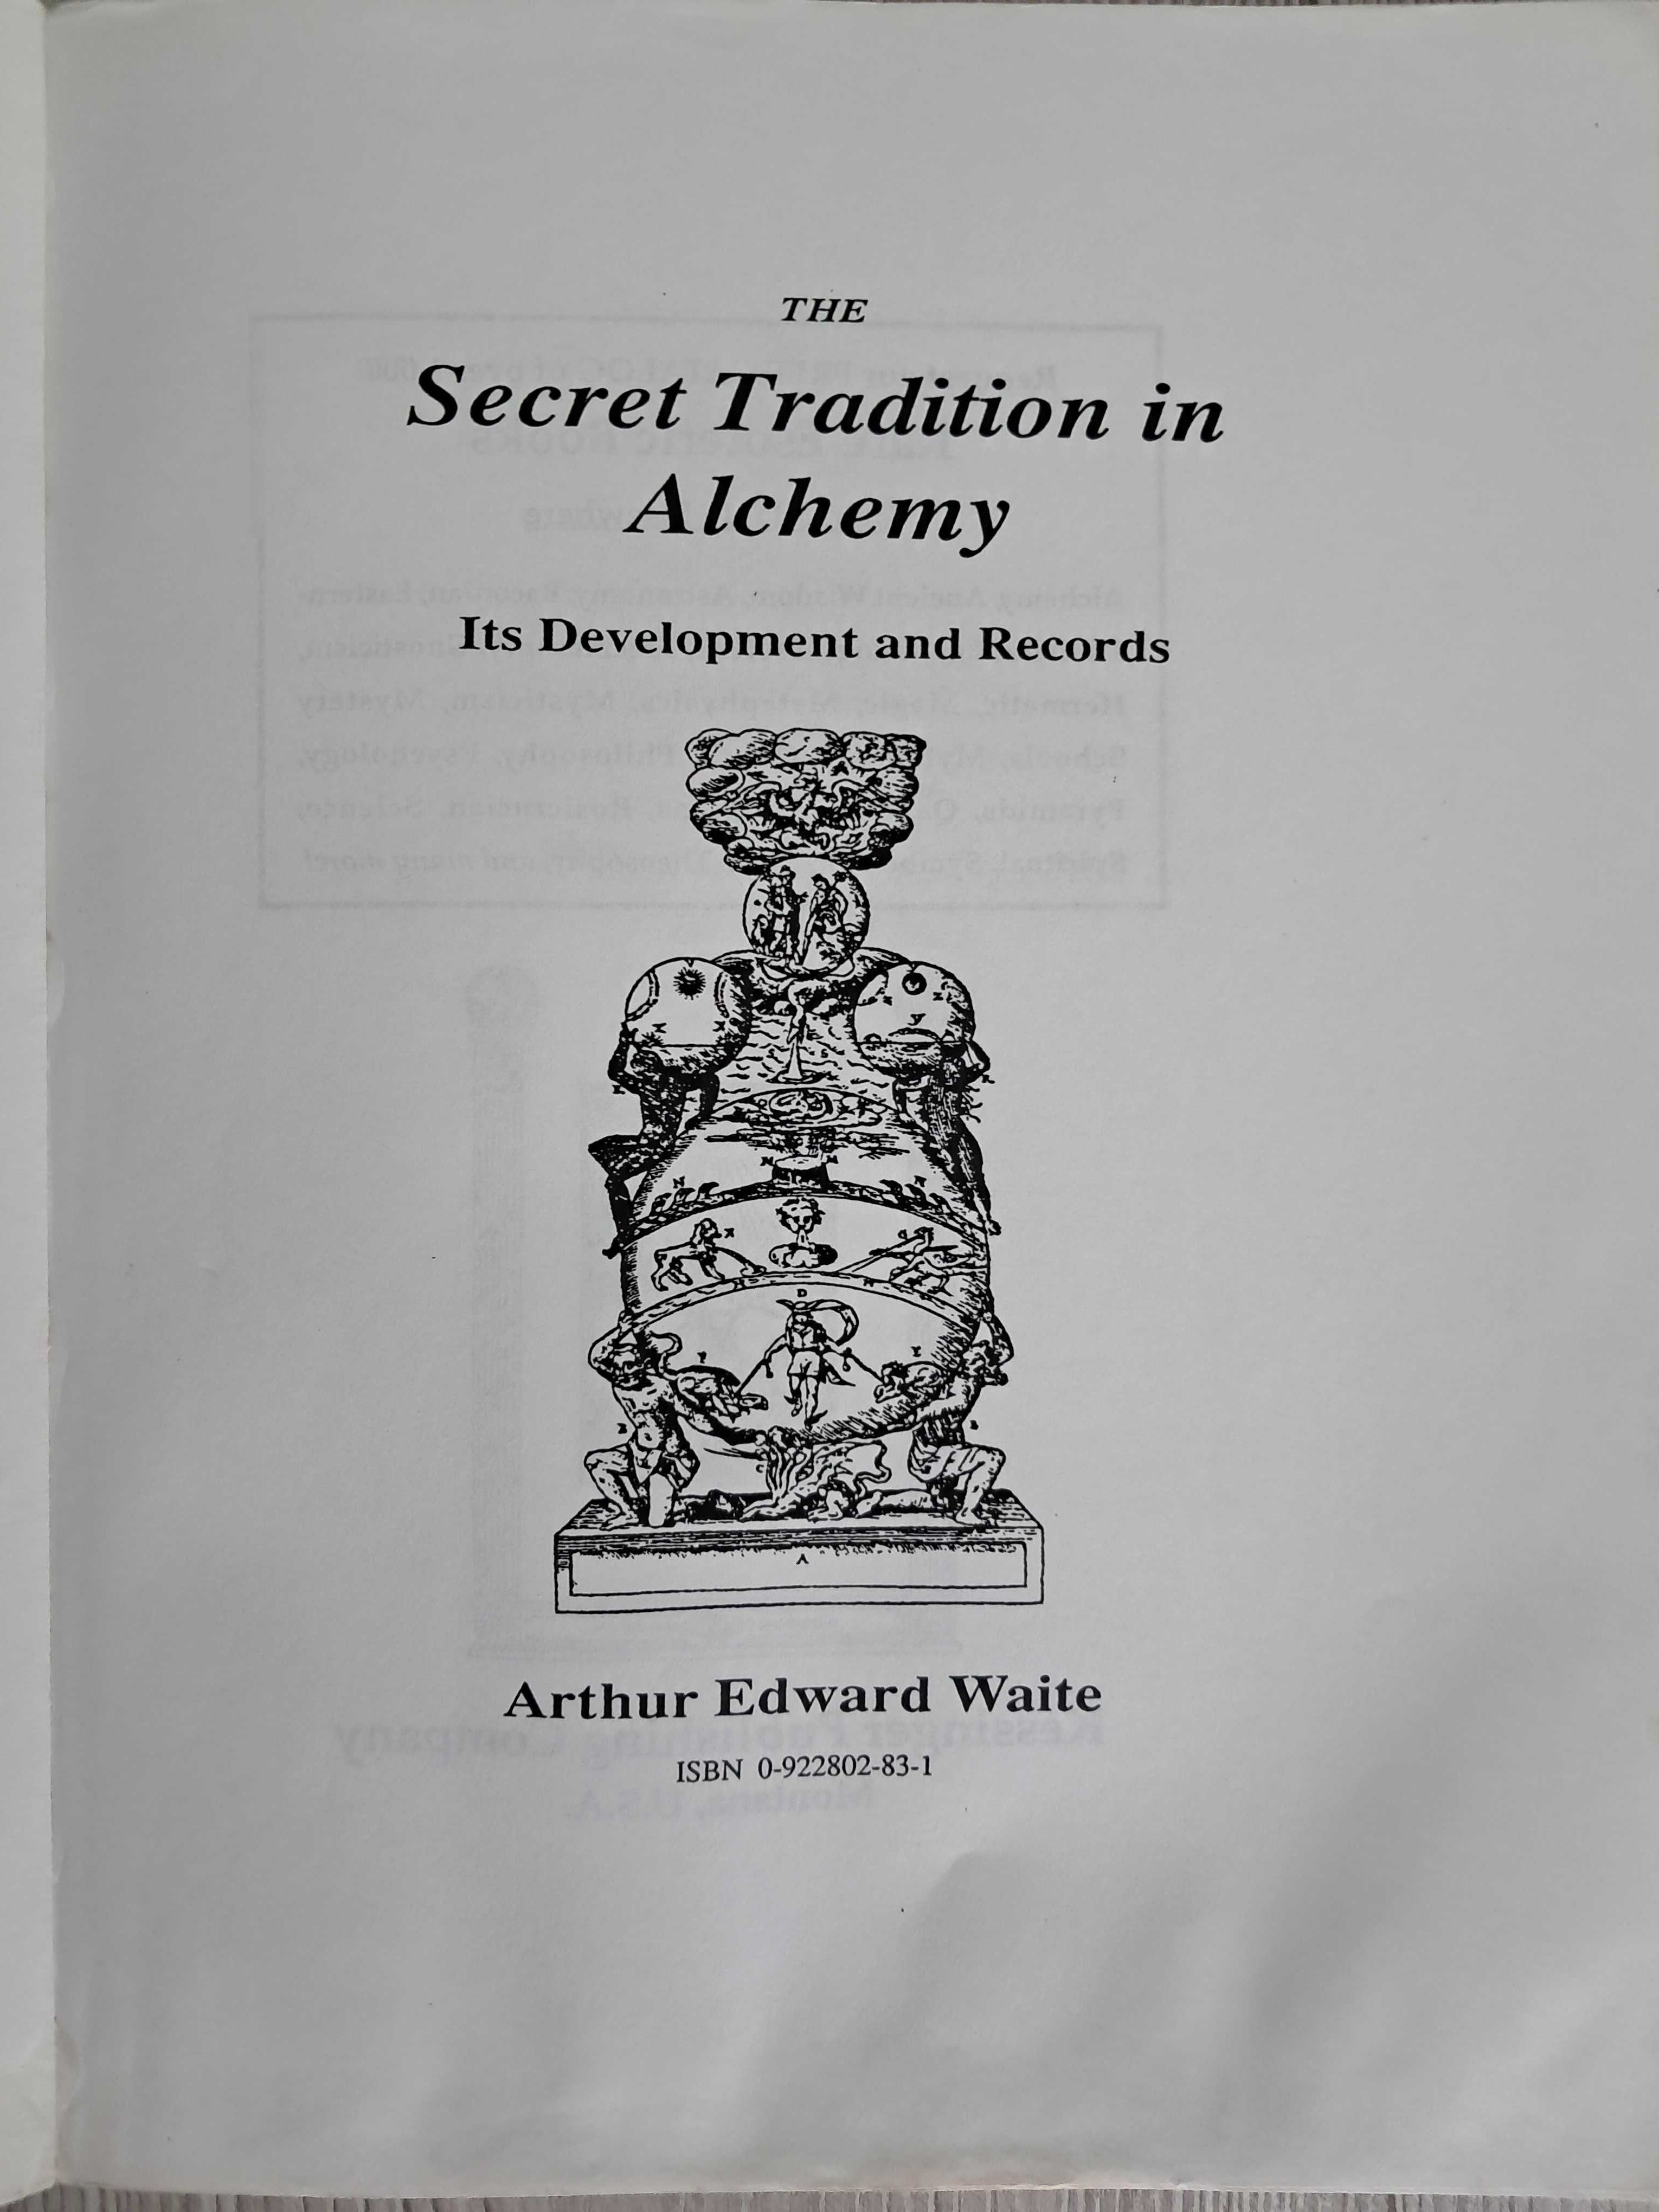 The Secret Tradition in Alchemy - Arthur Edward Waite